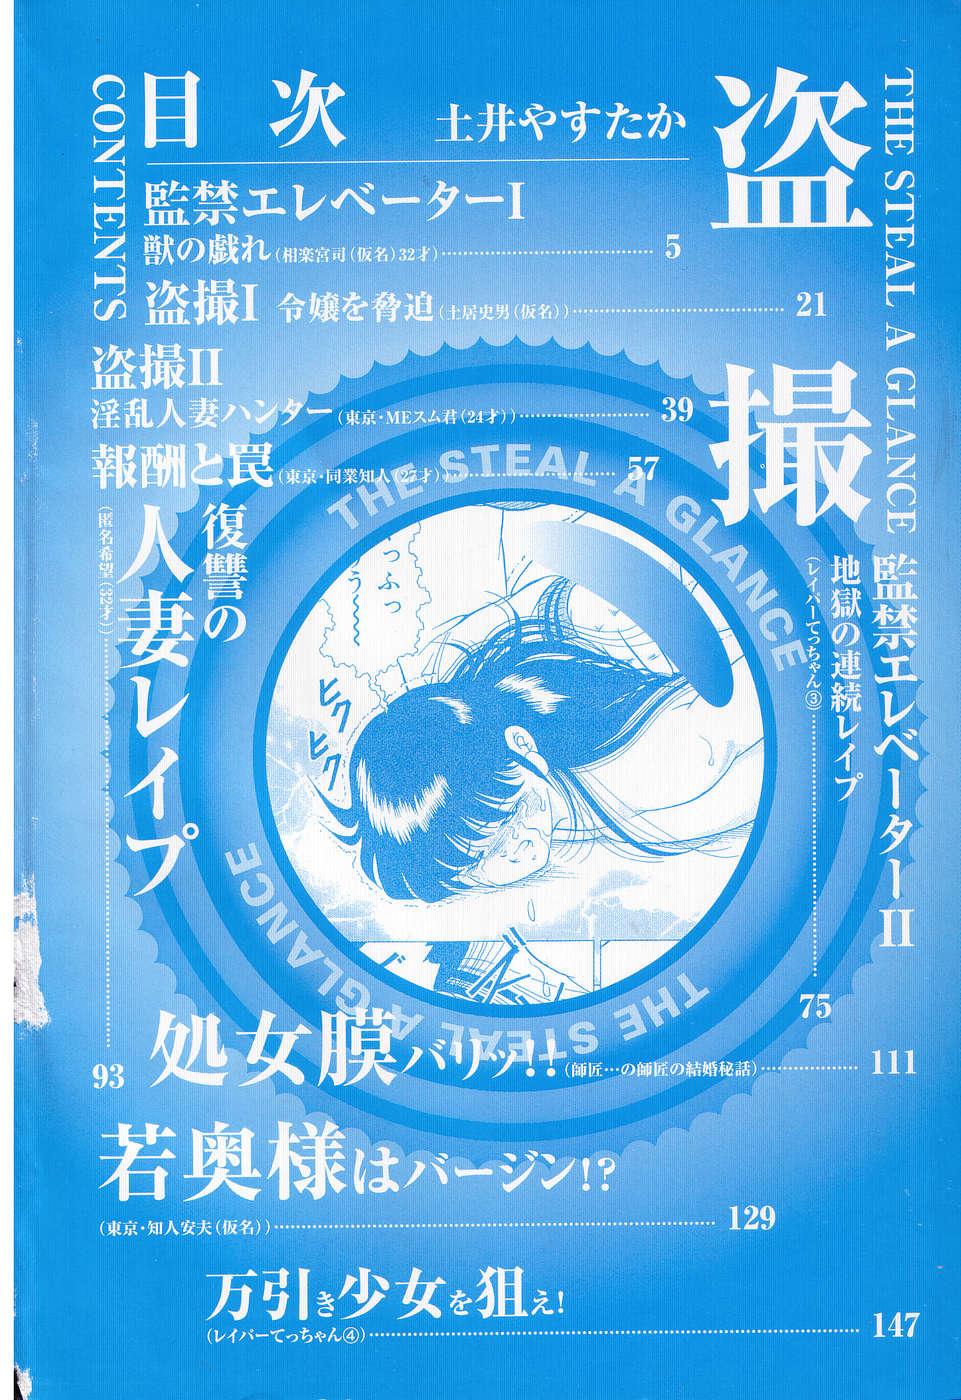 Tousatsu - The Steal A Glance 3